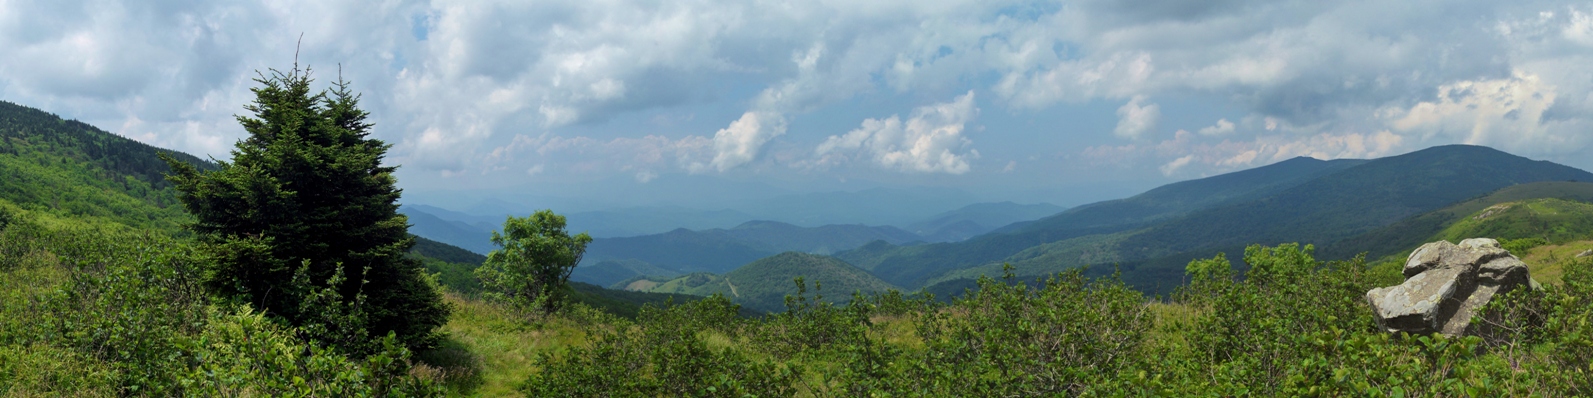 Appalachian Mountains North Carolina Wallpaper Image